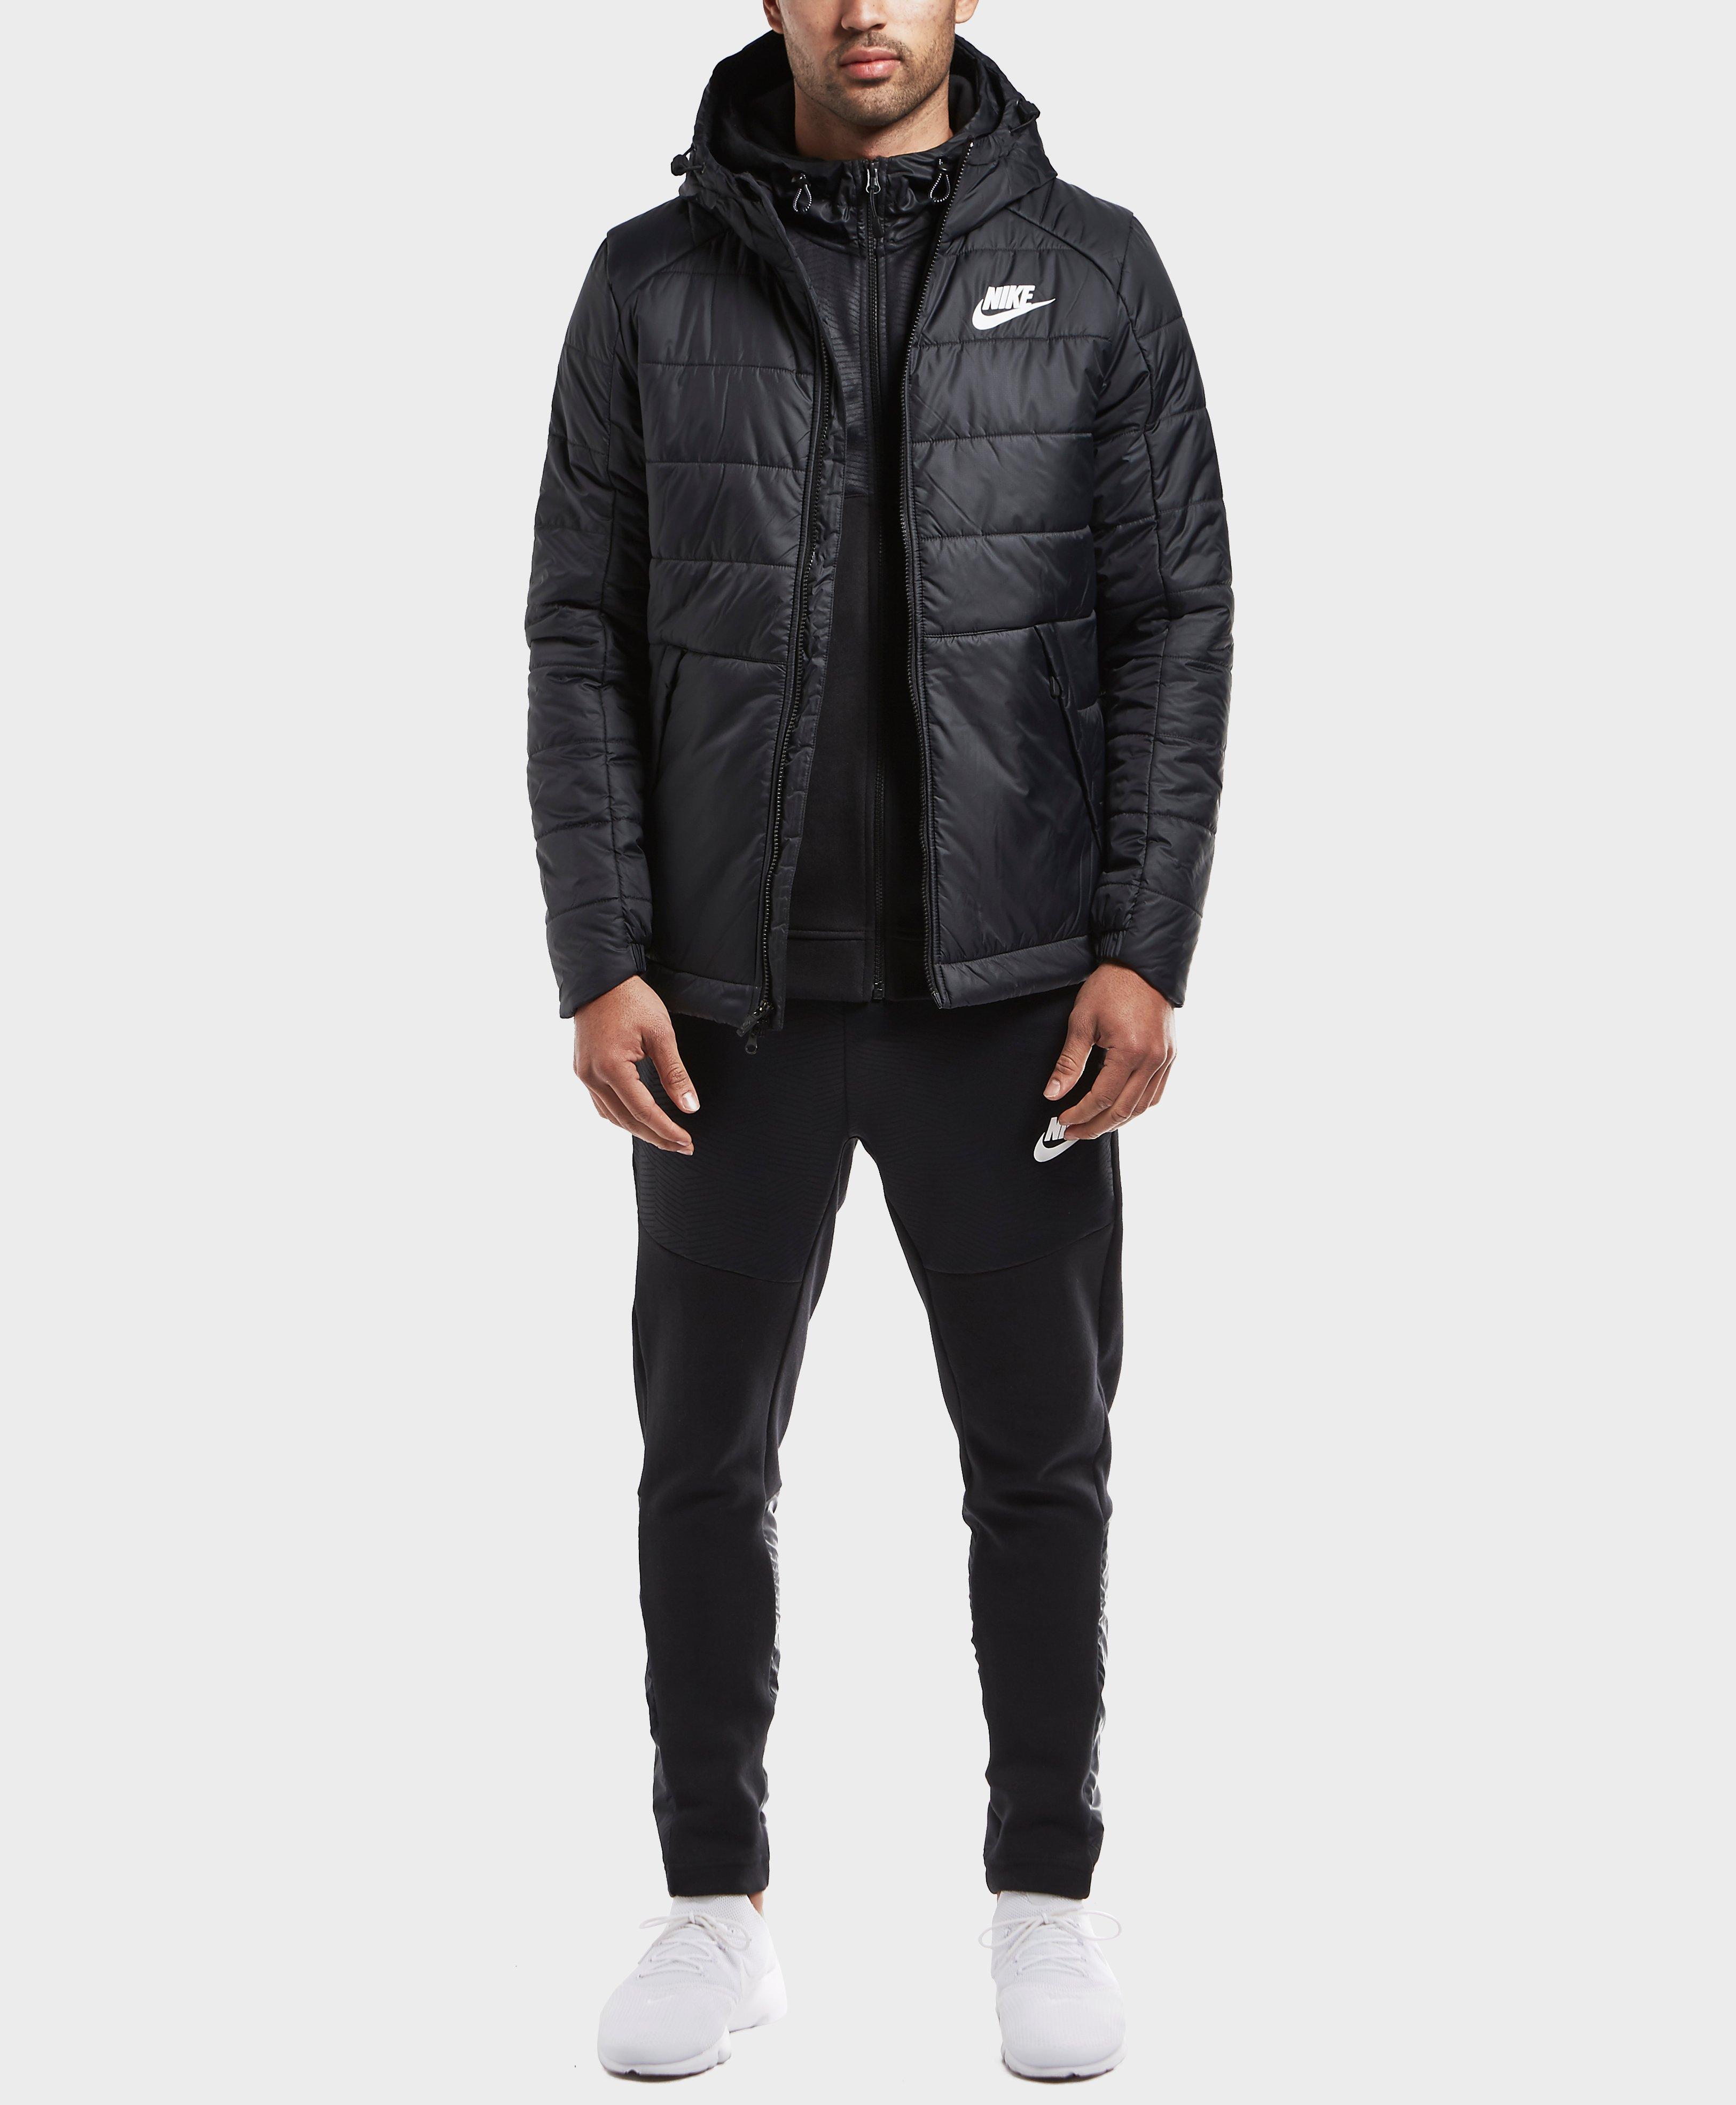 Nike Synthetic Bubble Jacket in Black for Men - Lyst